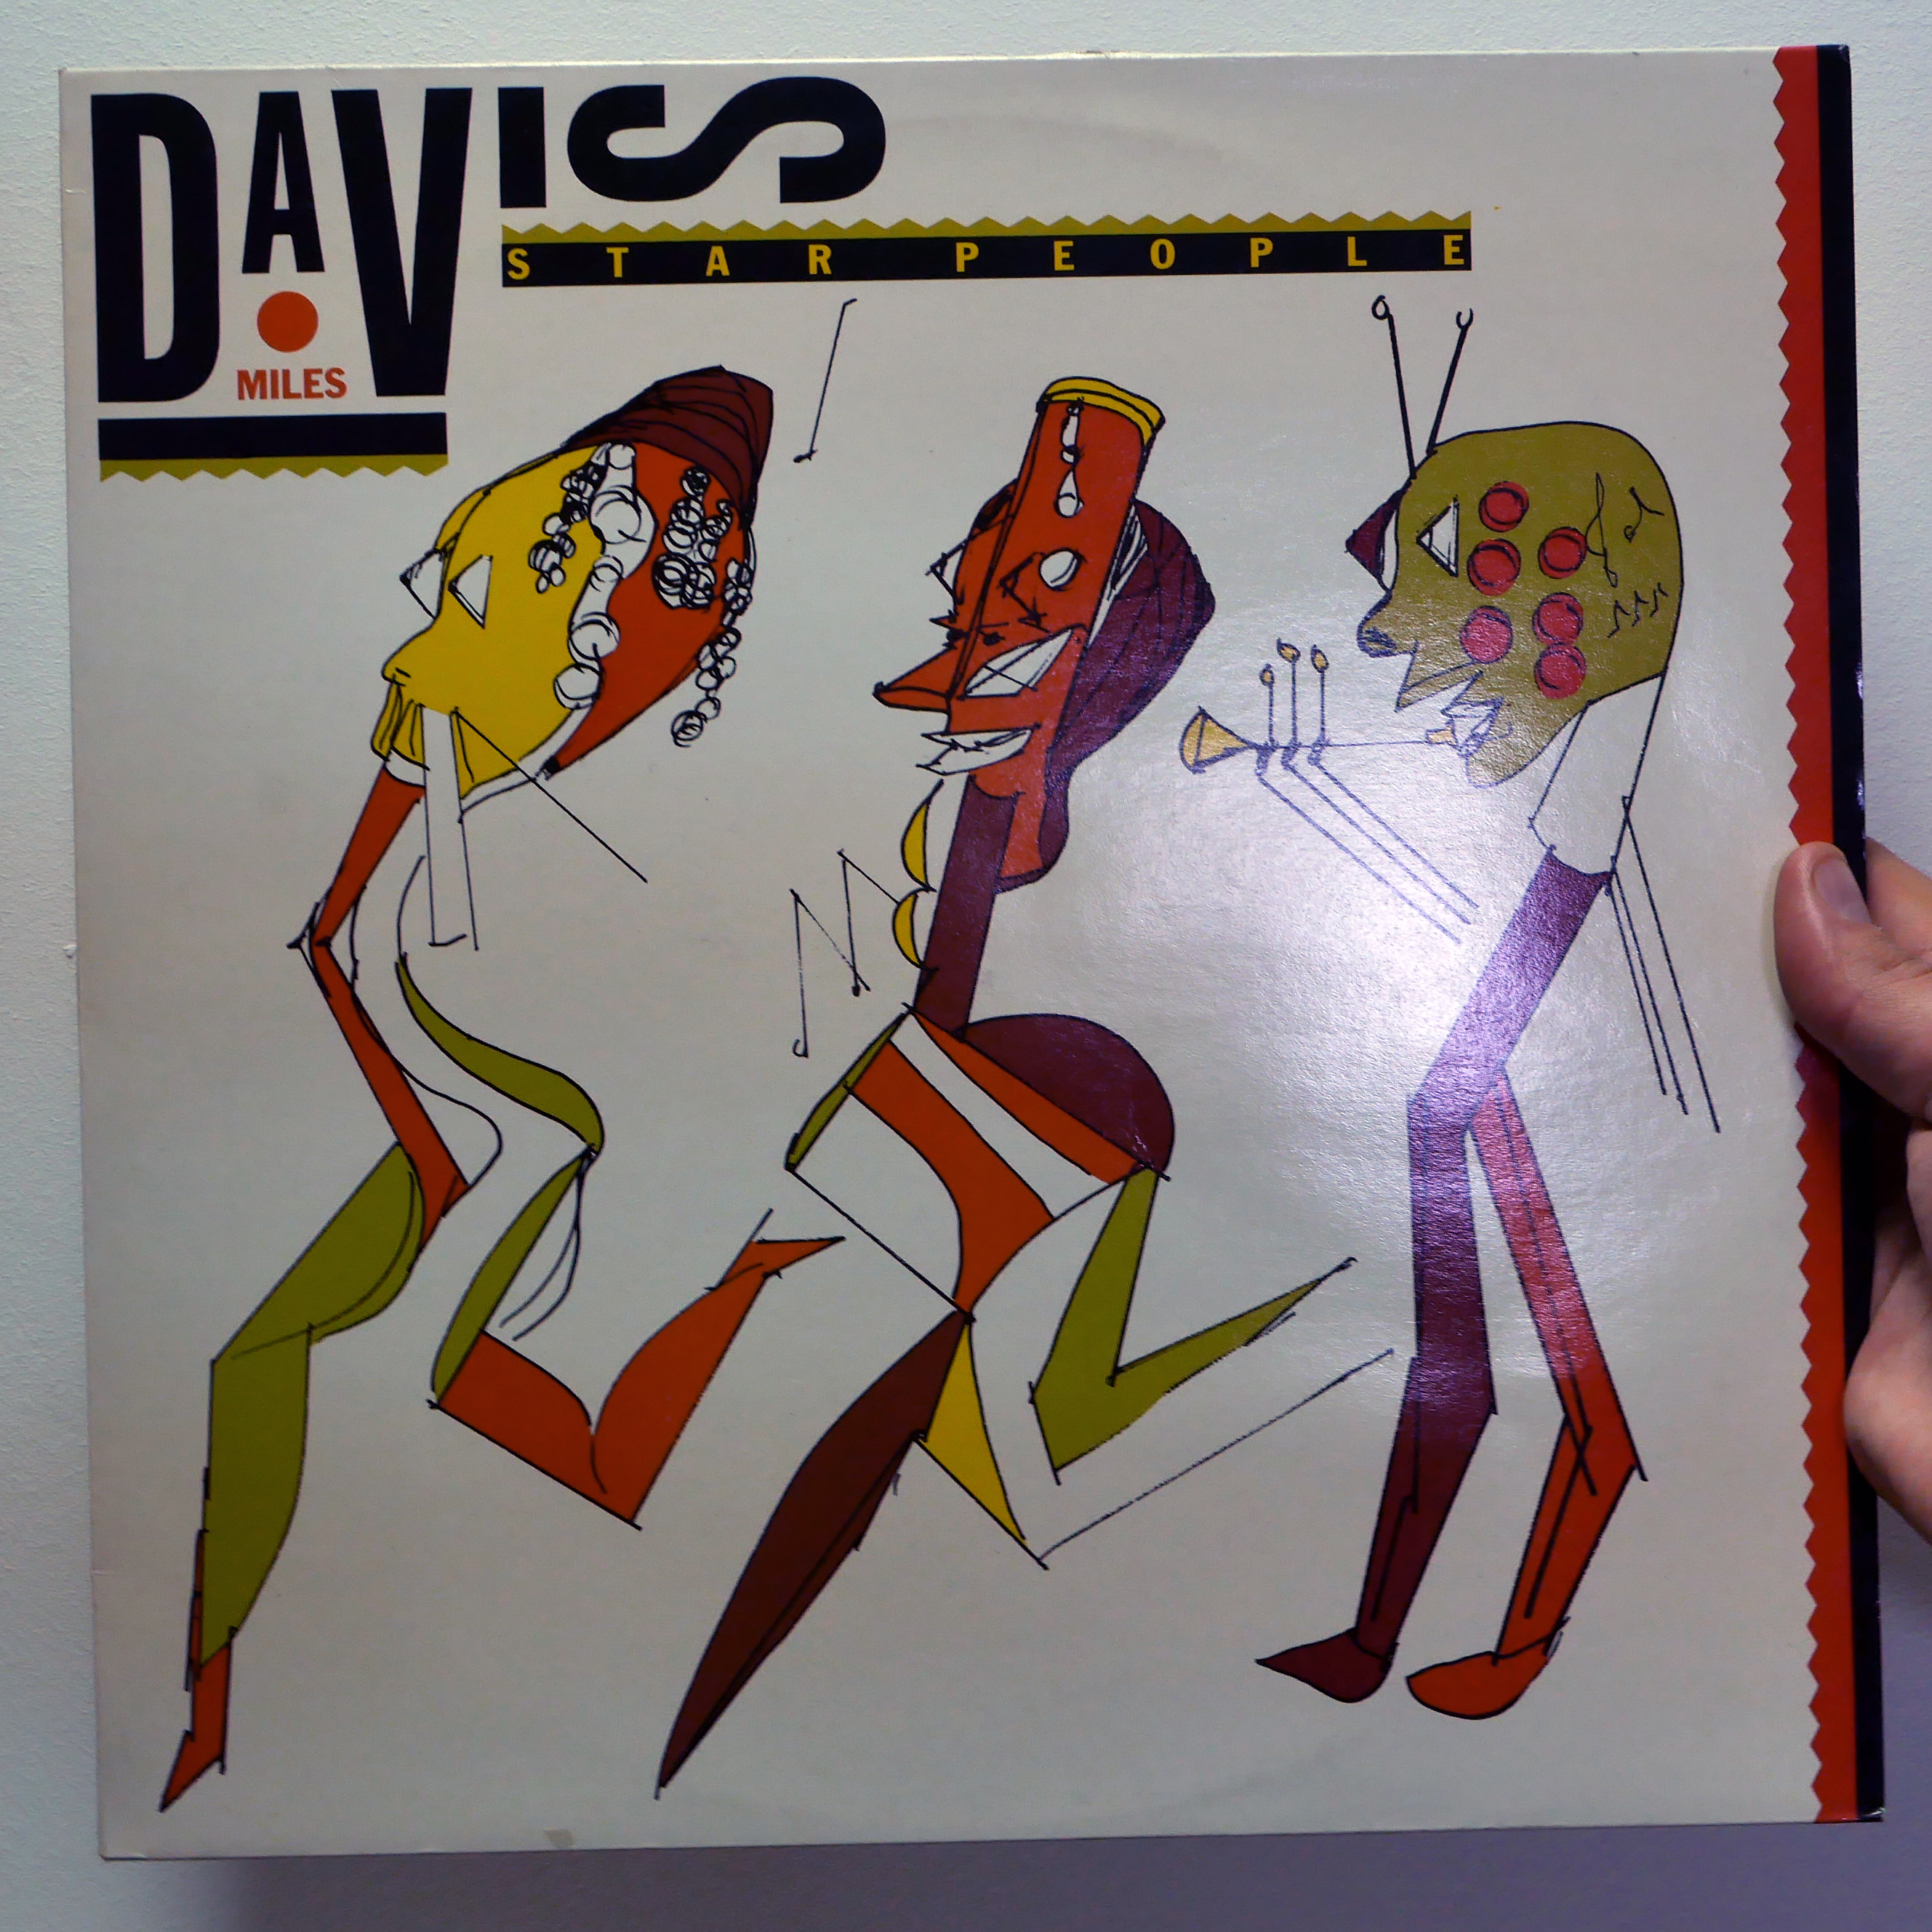 Miles Davis – Star People [LP, 1983]